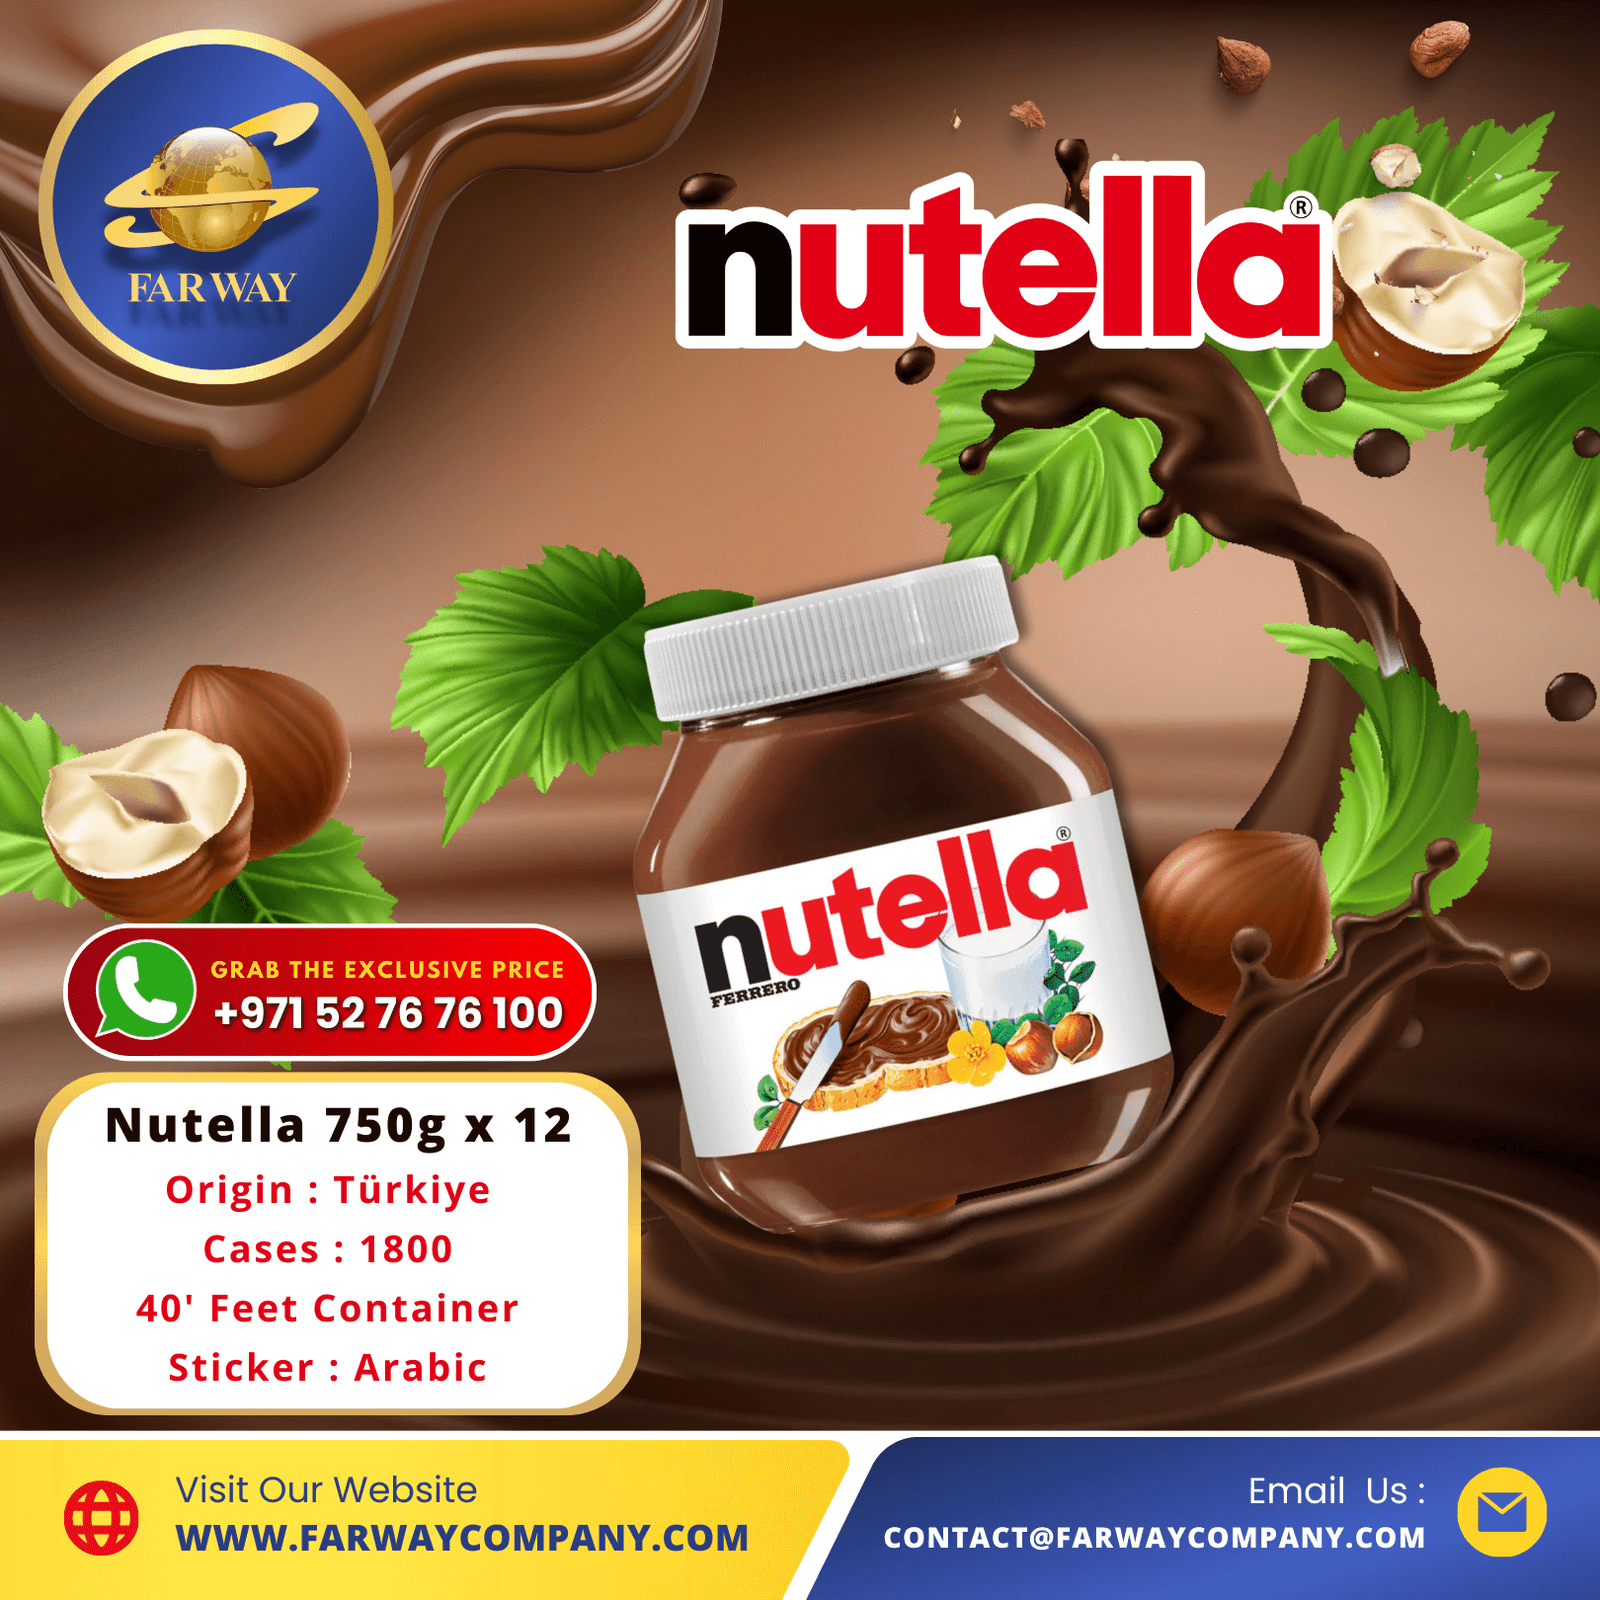 Nutella 750g Importer, Exporter & Distributor in Dubai, UAE, Middle East